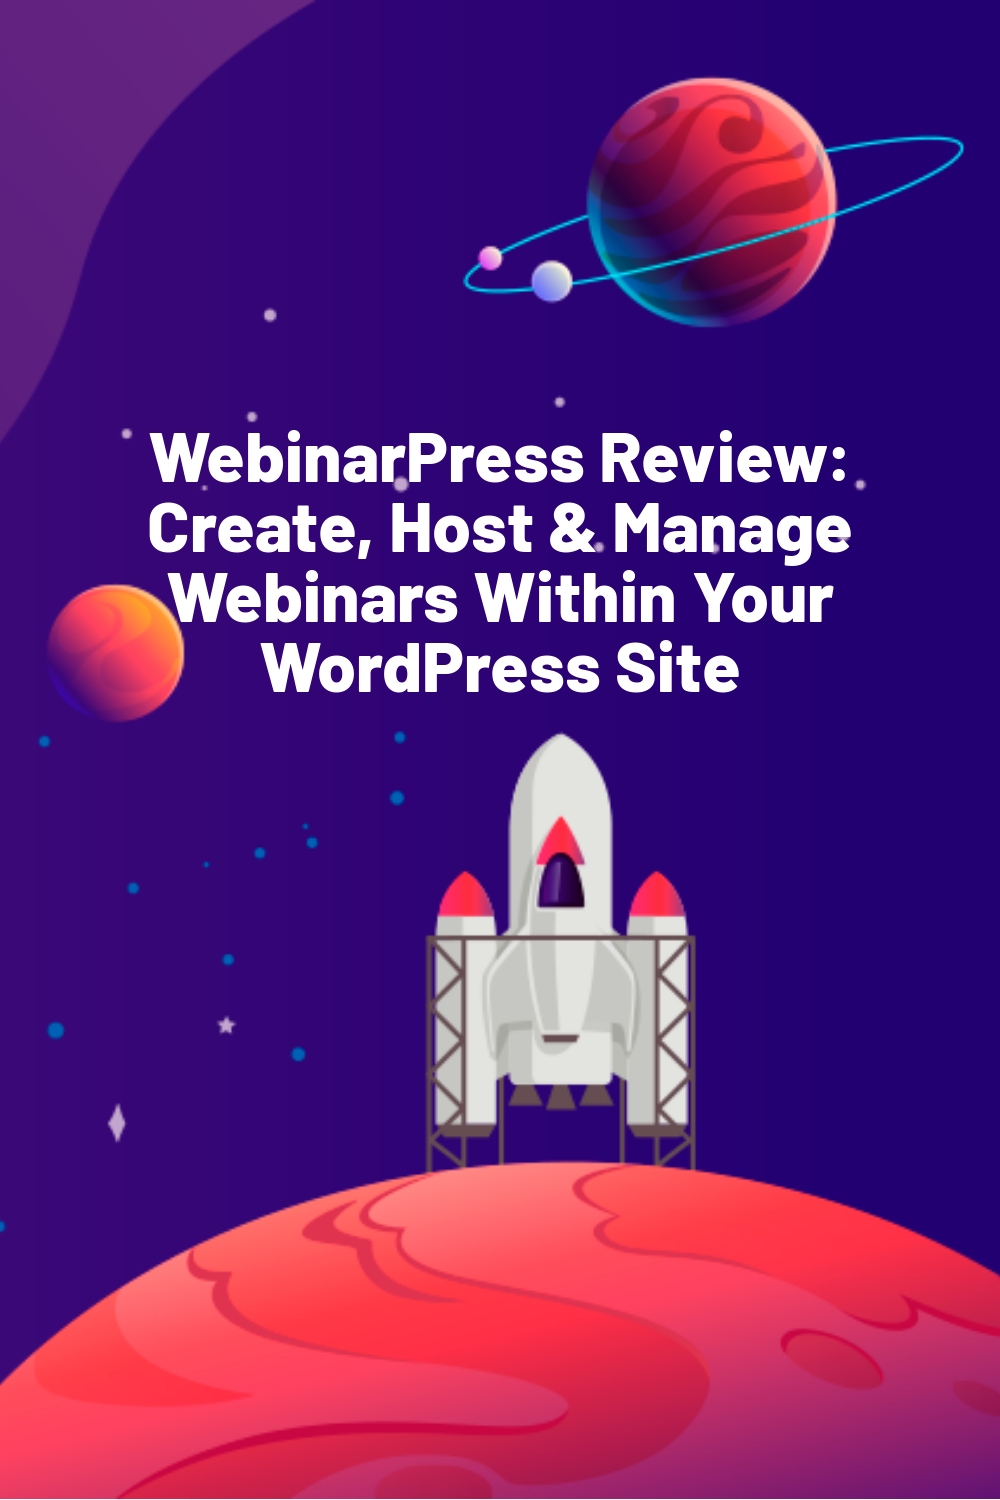 WebinarPress Review: Create, Host & Manage Webinars Within Your WordPress Site